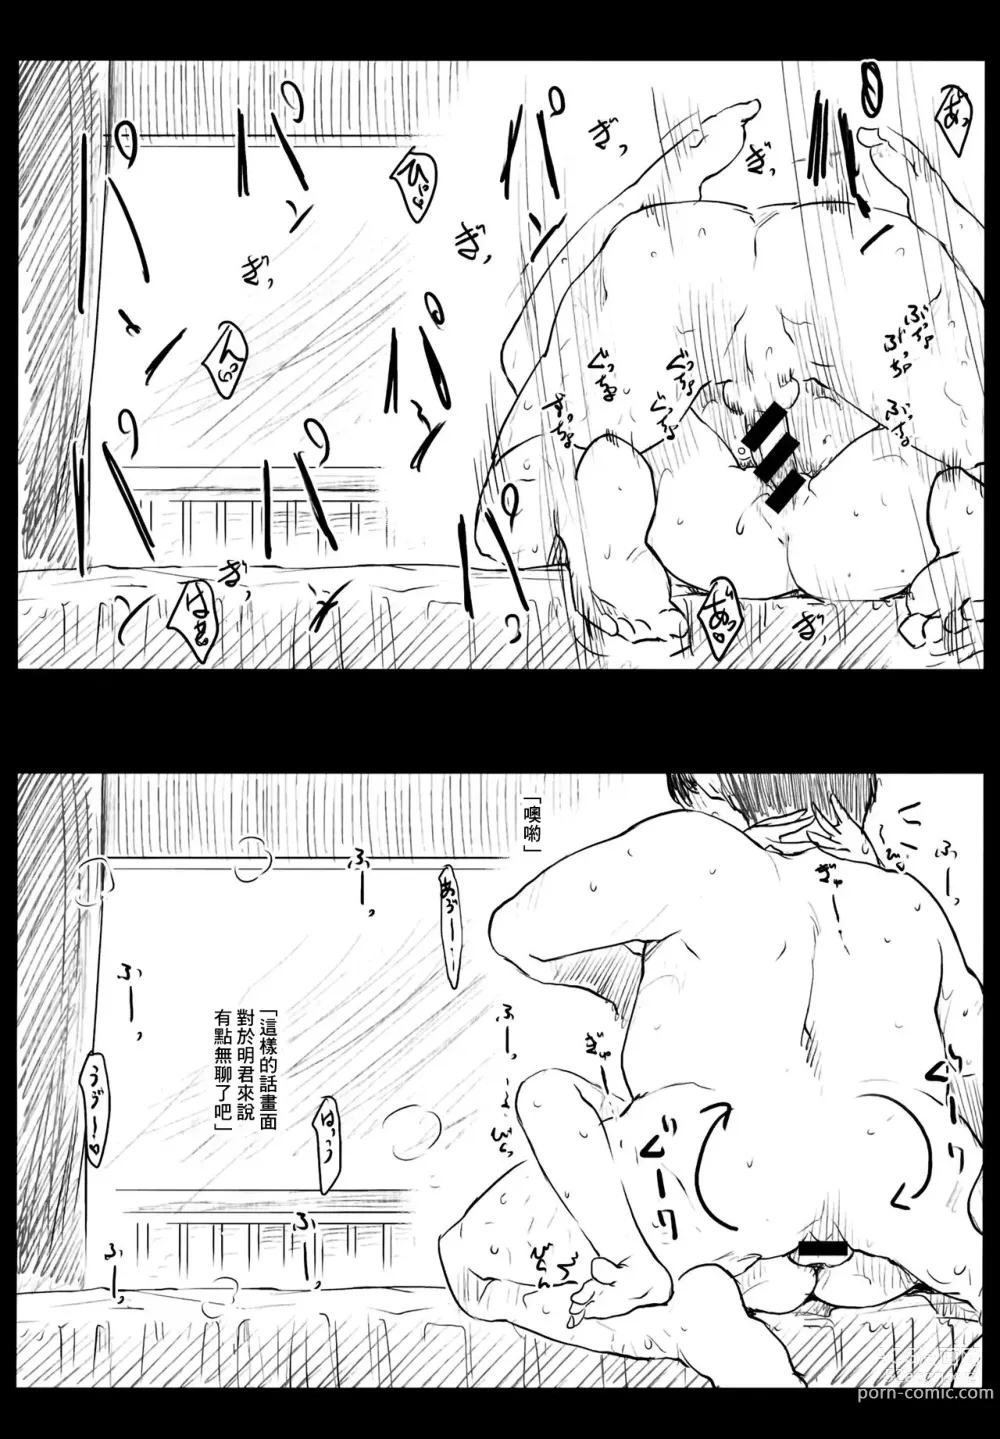 Page 6 of manga MISDIRECTION Toranoana Gentei Shousasshi